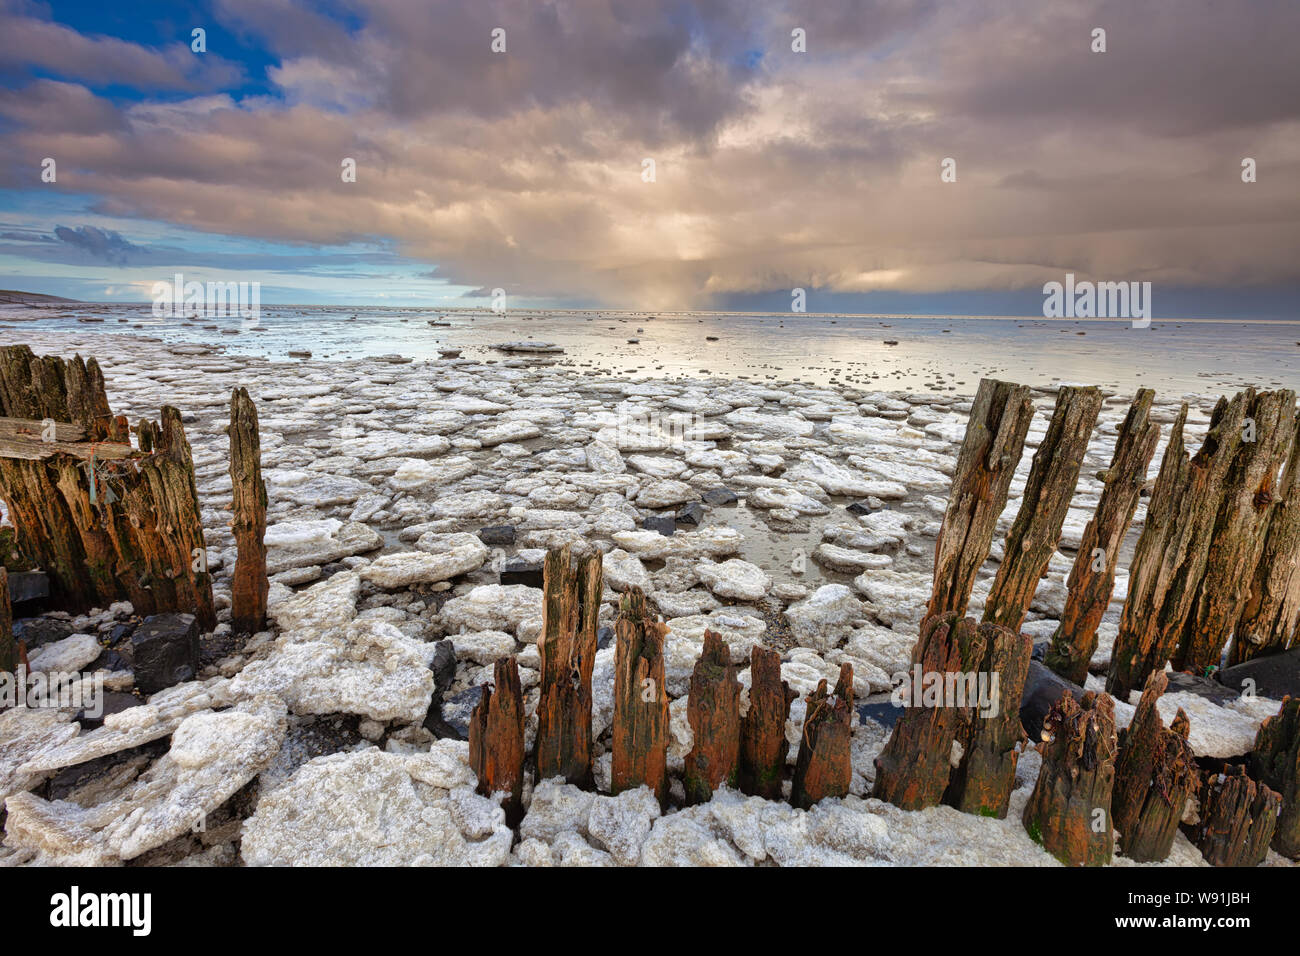 IJsschotsen op de Waddenzee - Shelf ice on the Wadden sea Stock Photo